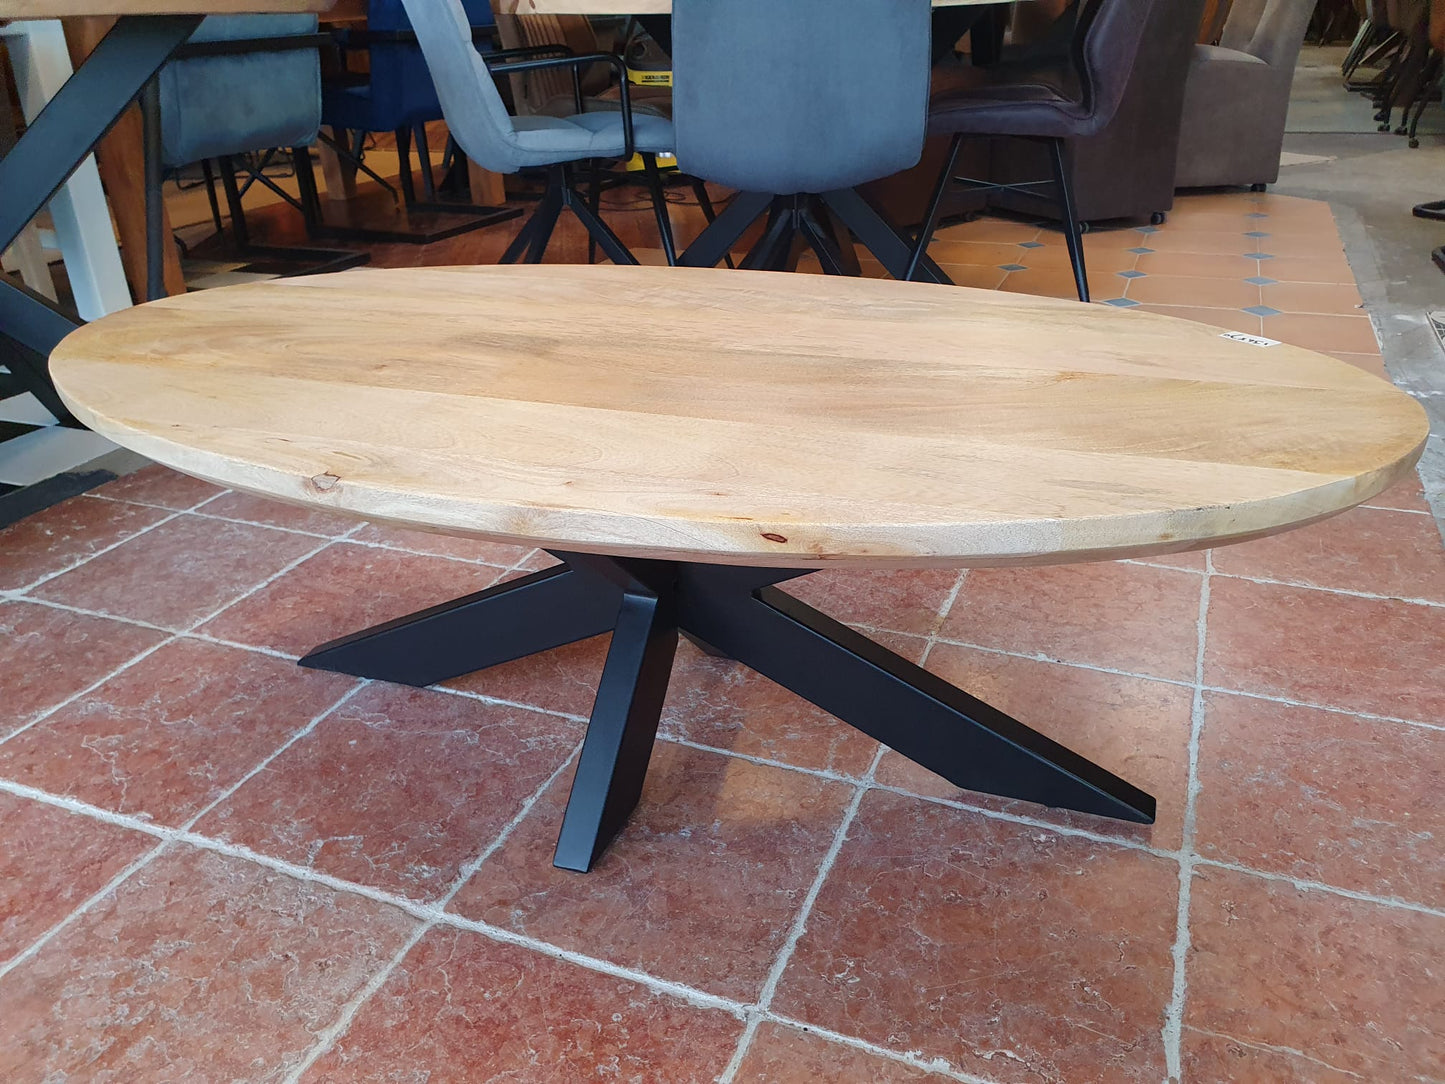 Gladde mangohouten naturelkleurige ovale salontafel met swiss edge 130x70cm incl. zwart metalen matrix/spinpoot